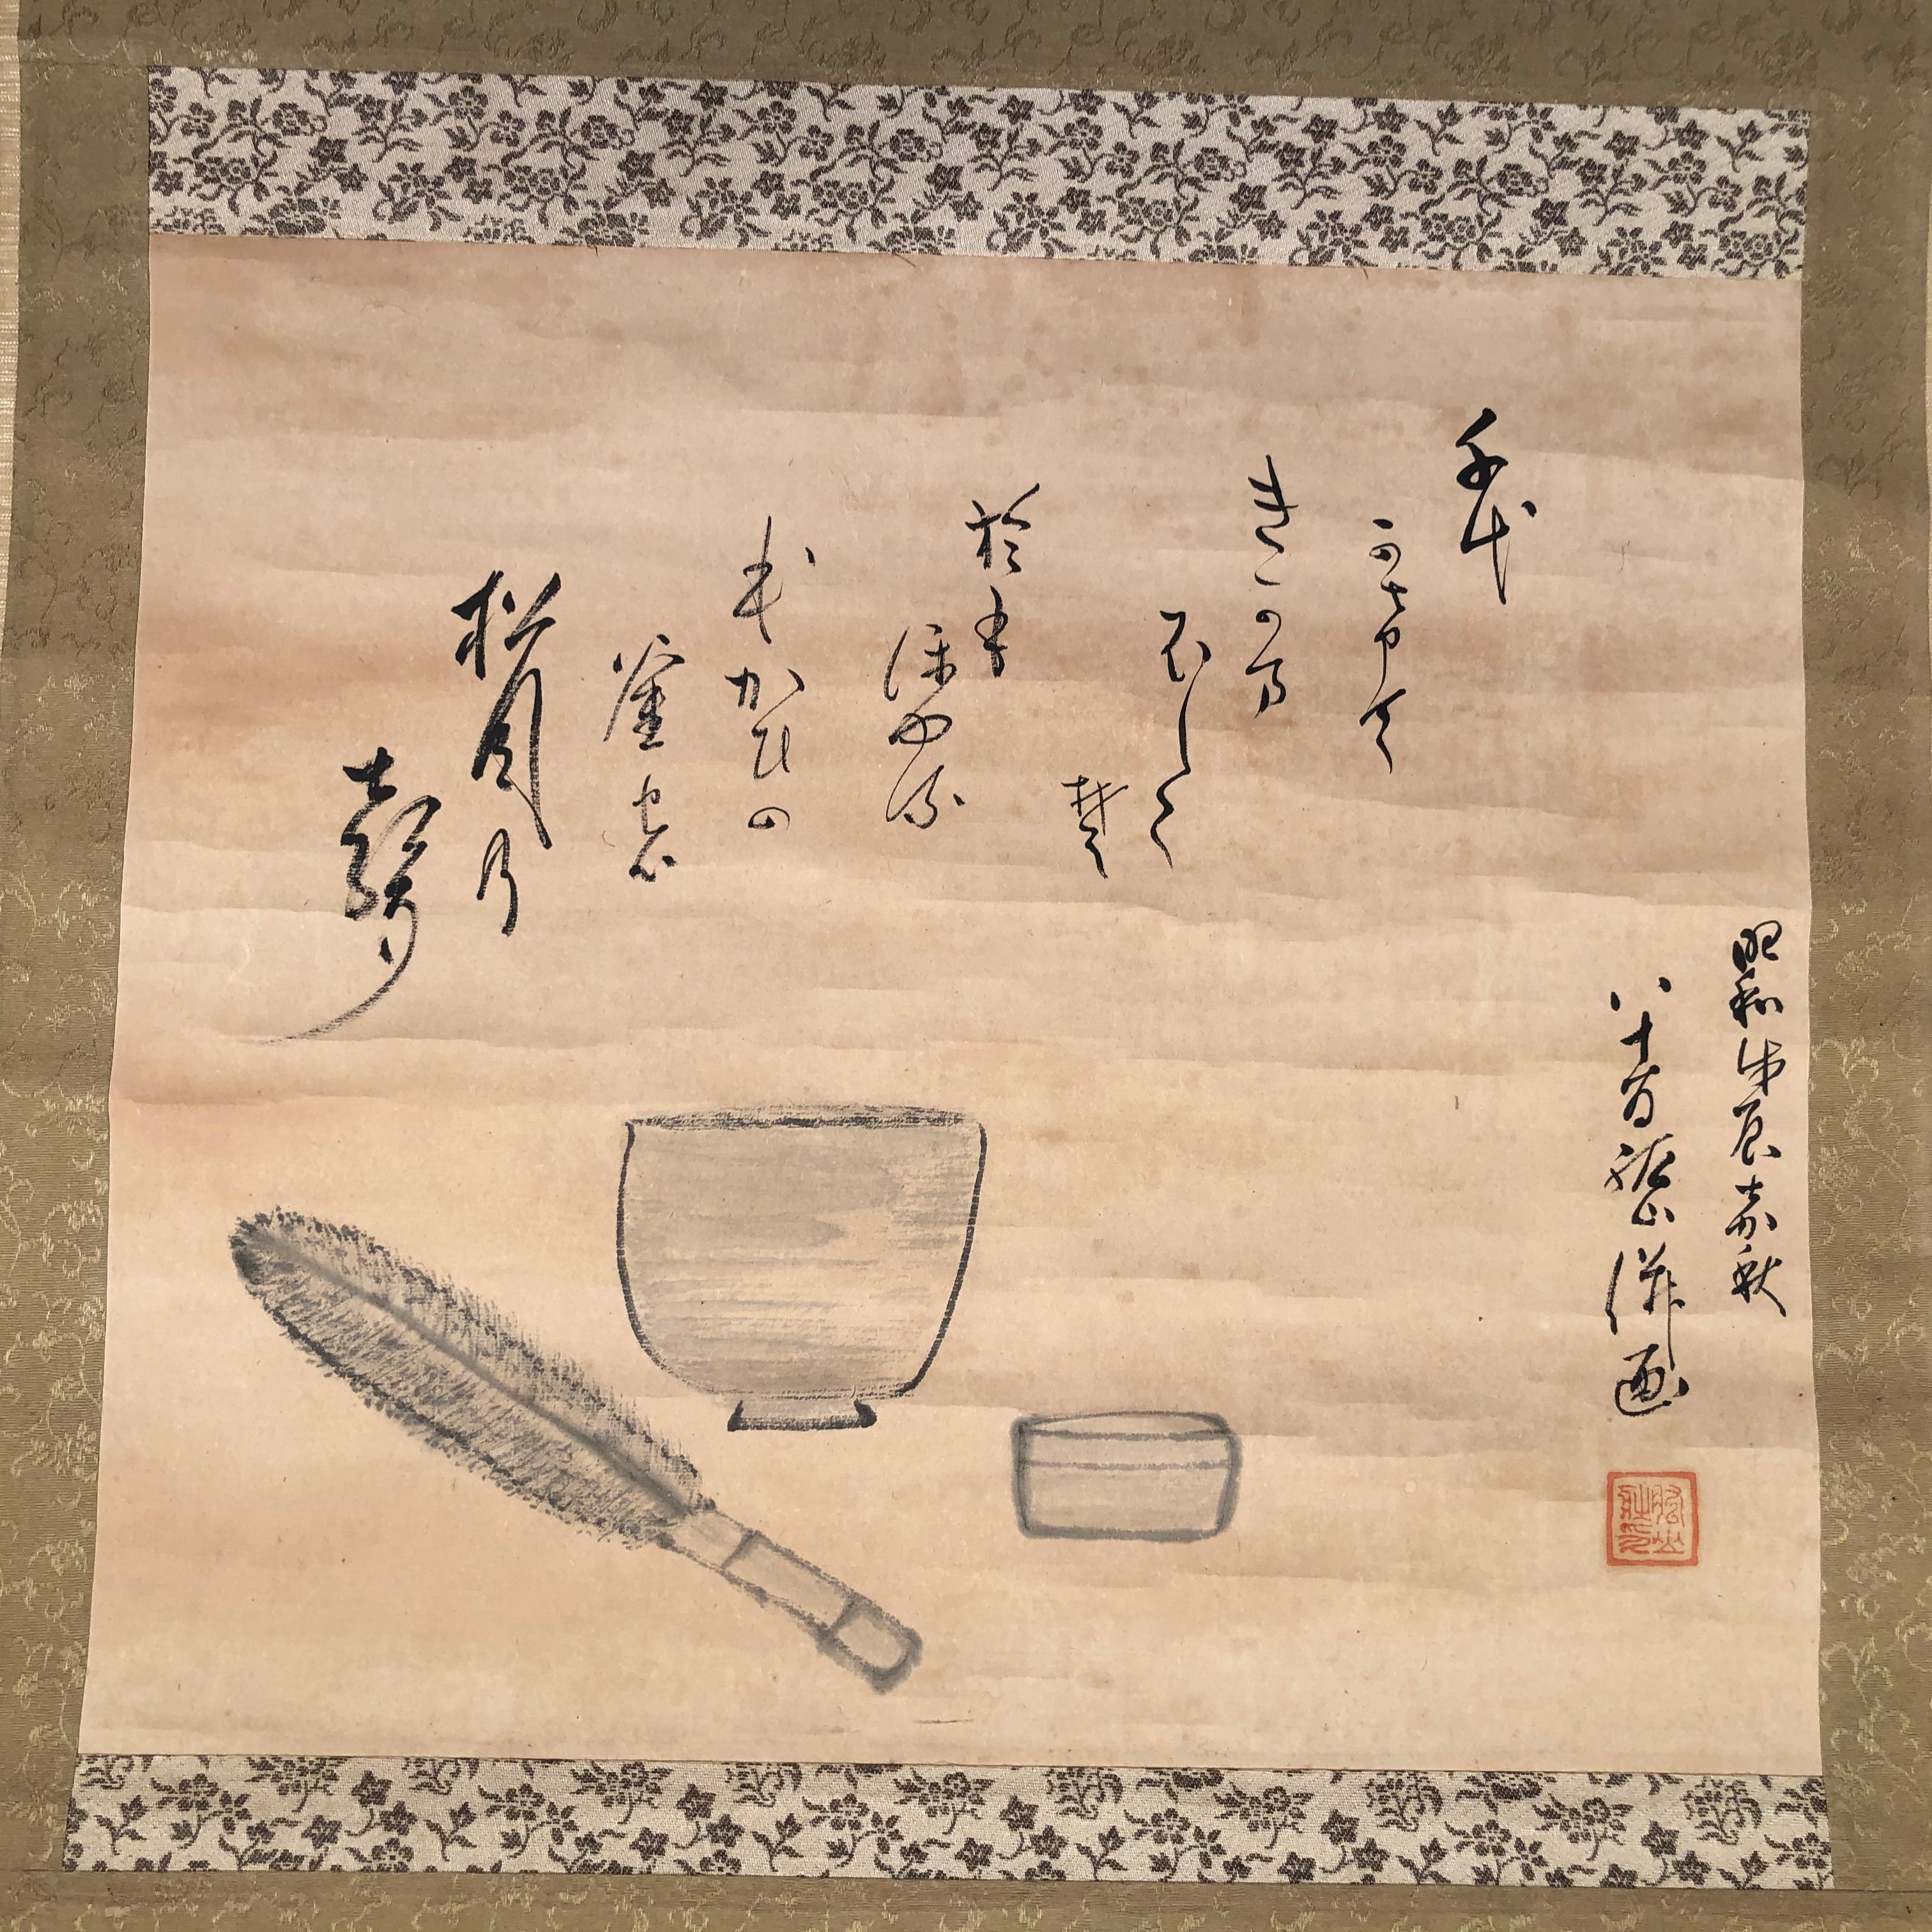 Comfortable convenient size artwork suitable for small spaces

Japan, A fine antique hand painted 